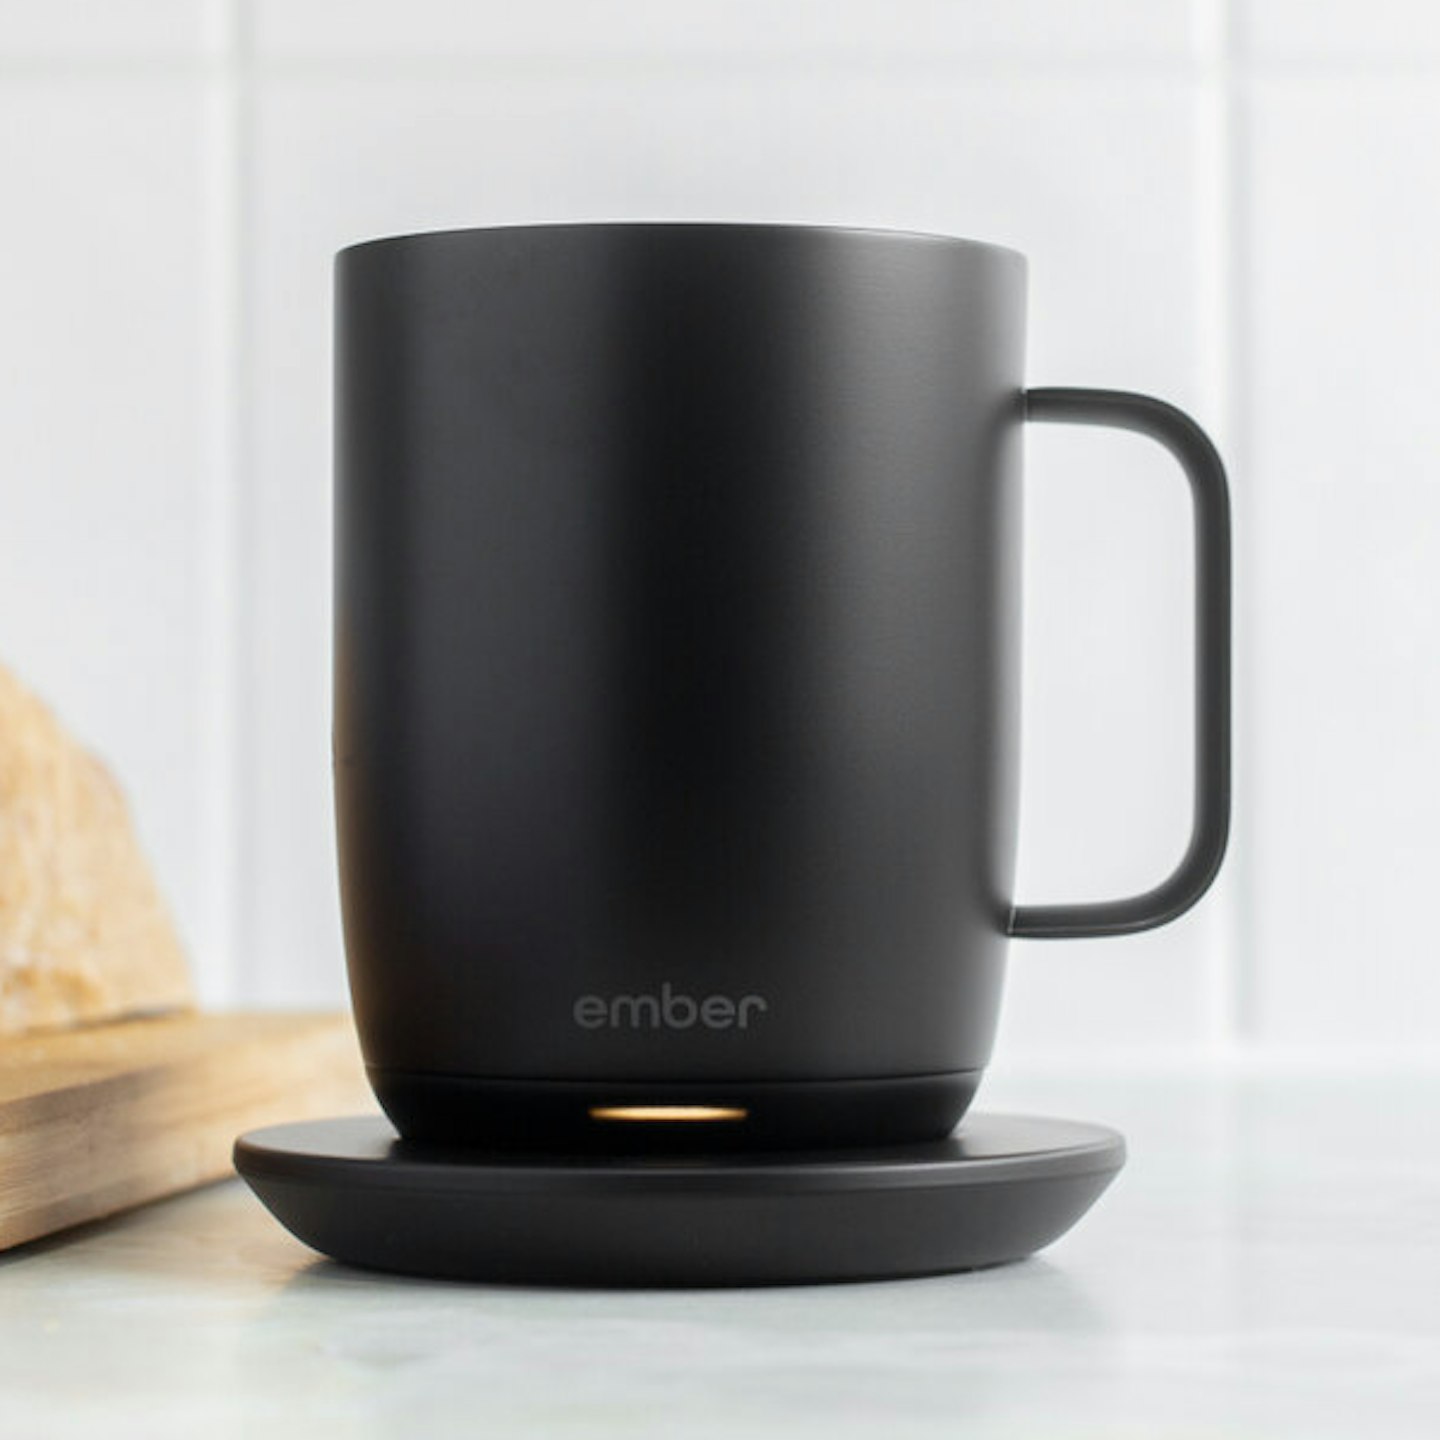 Ember Mug Temperature Control Smart Mug, 99.99